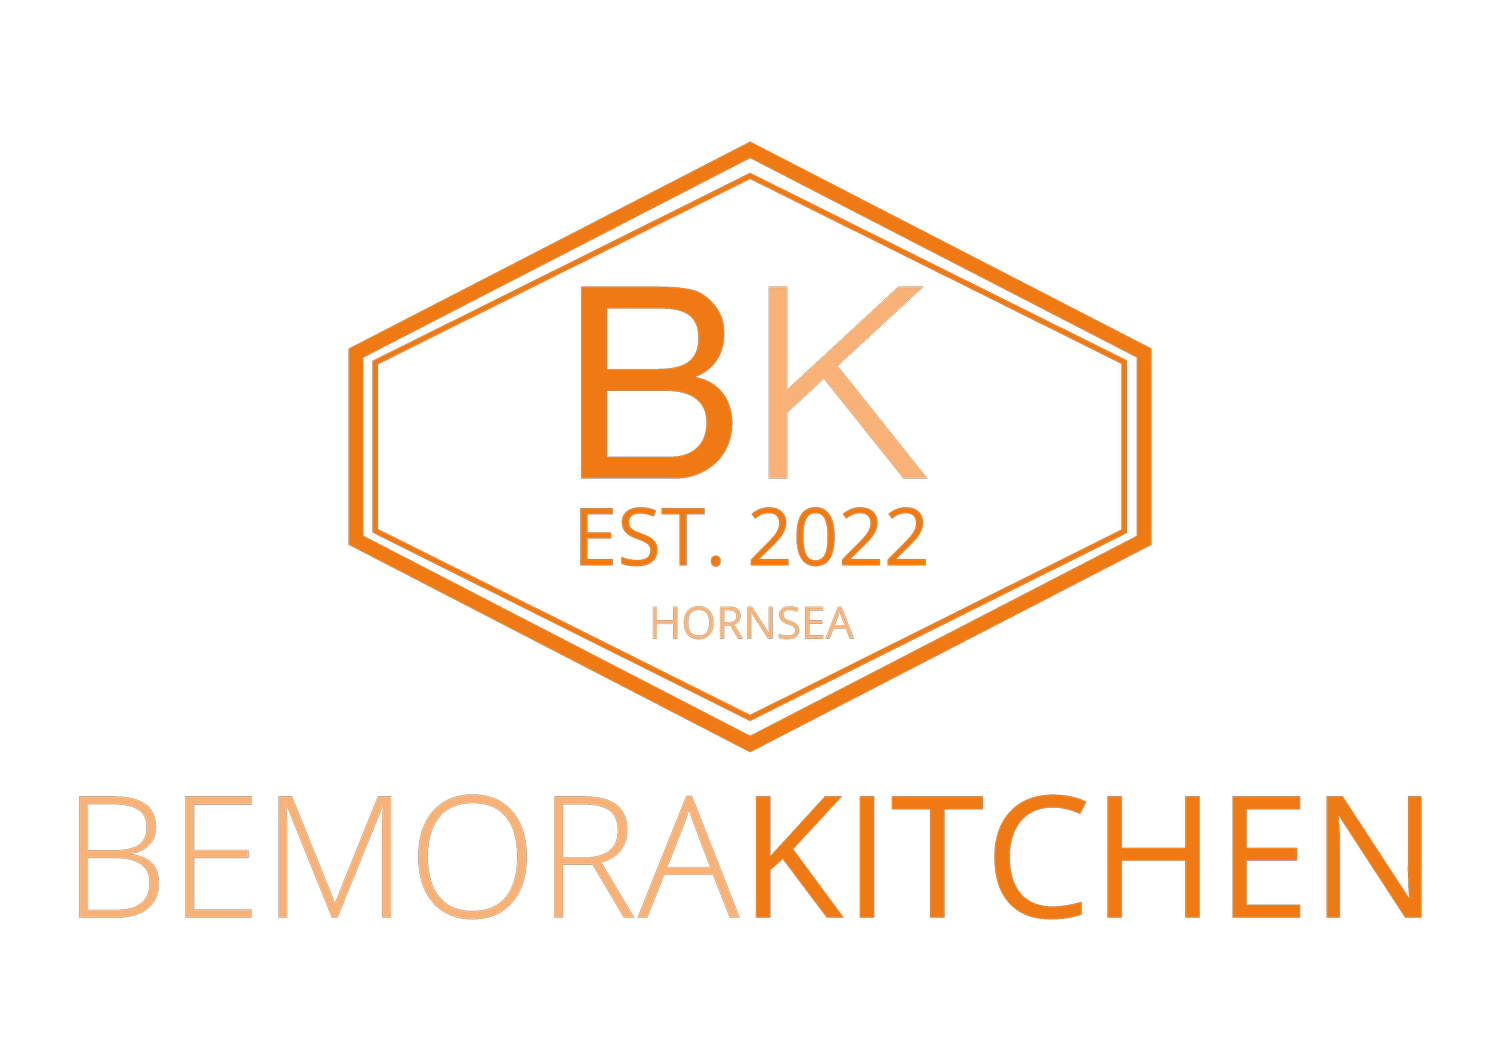 Bemora Kitchen